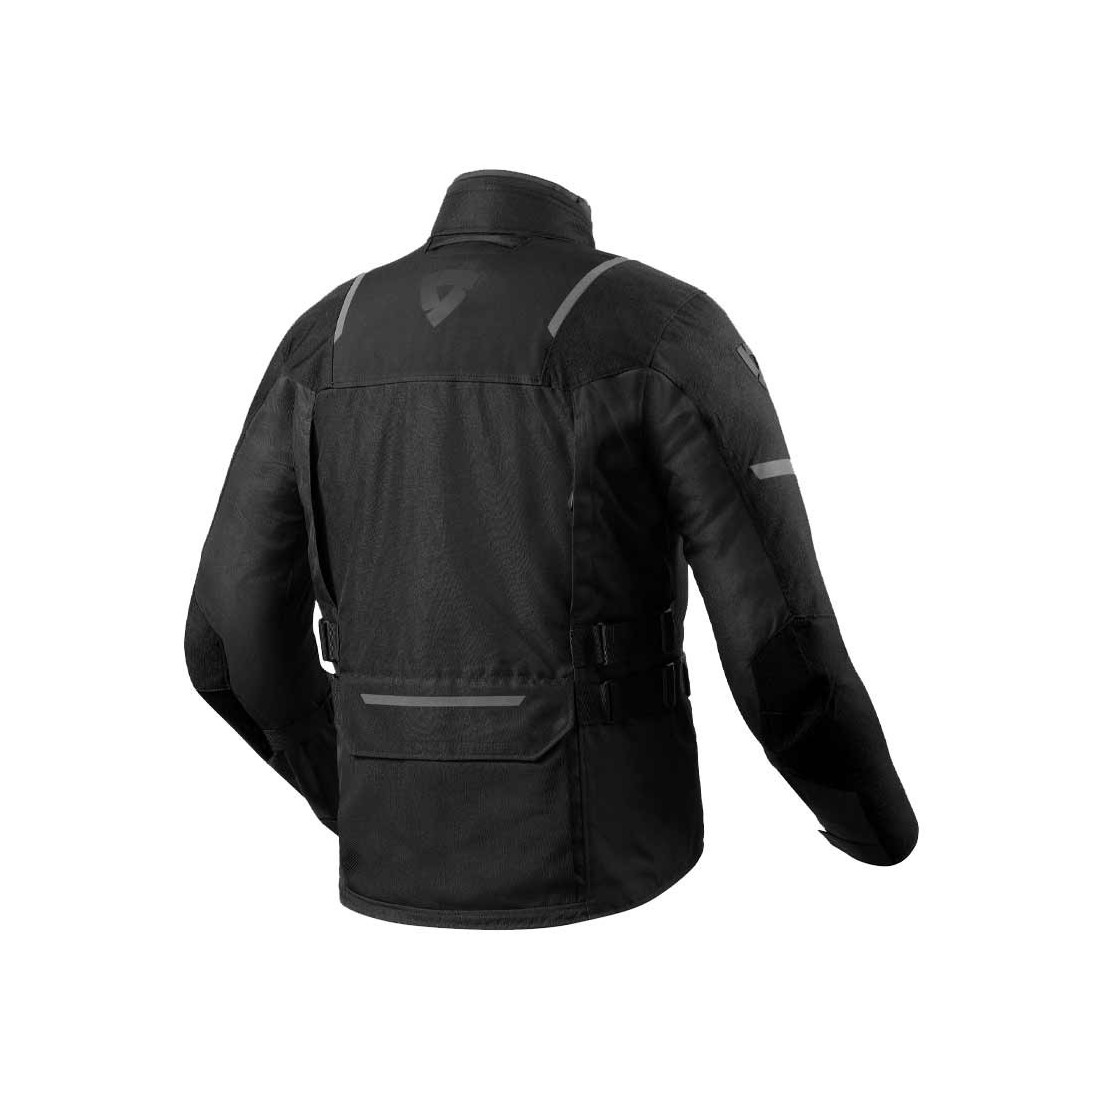 Revit Offtrack 2 H2O motorcycle jacket black